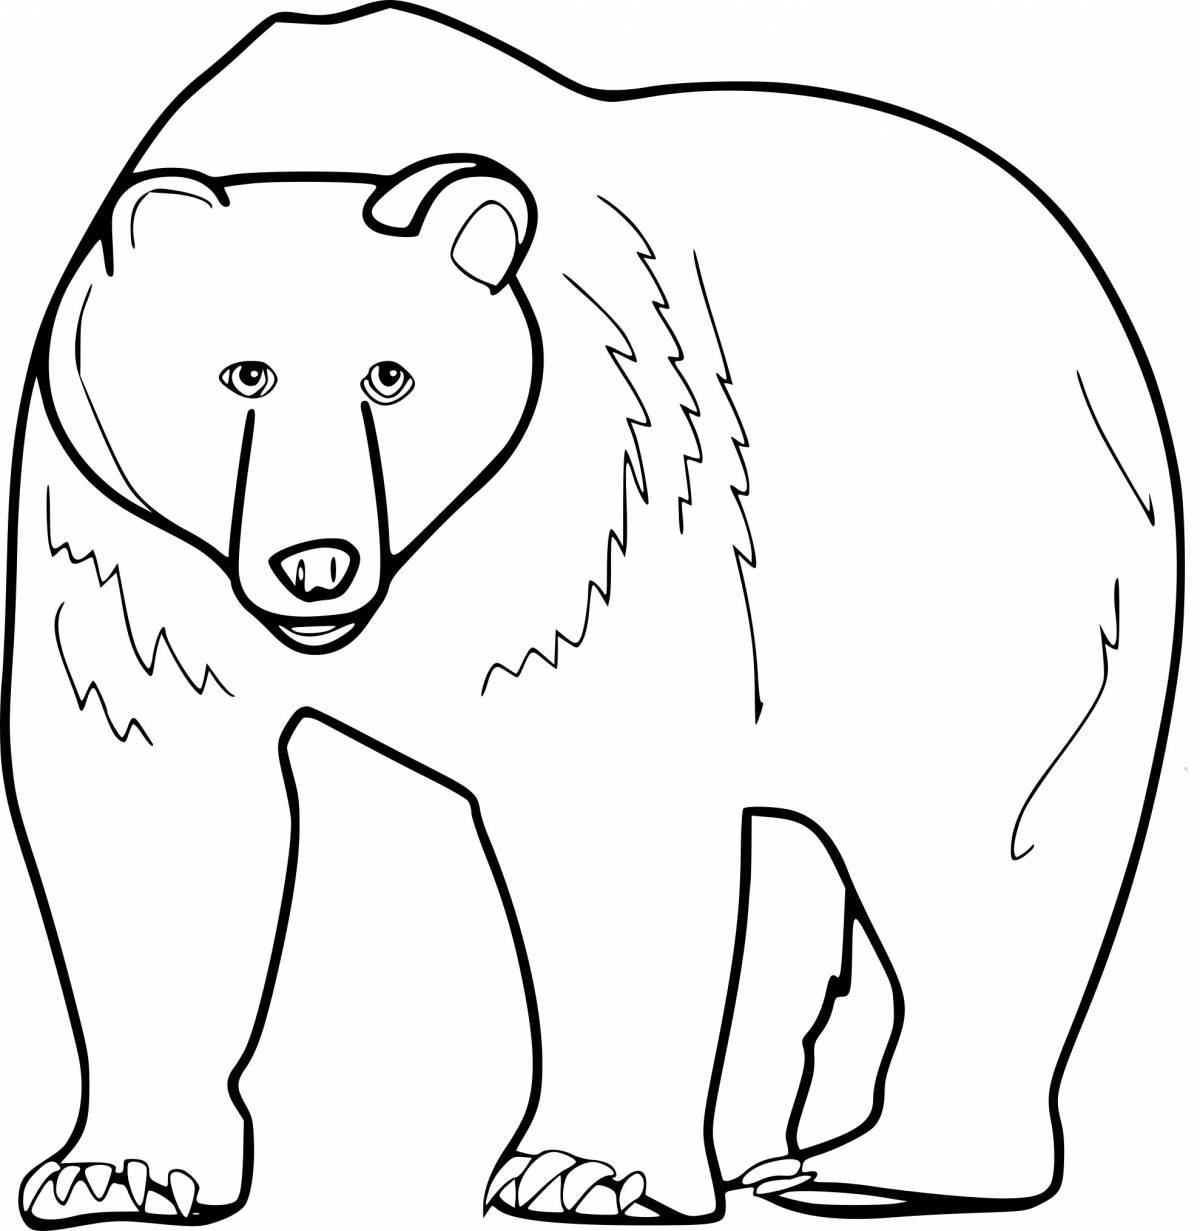 Huggable bear coloring book for kids